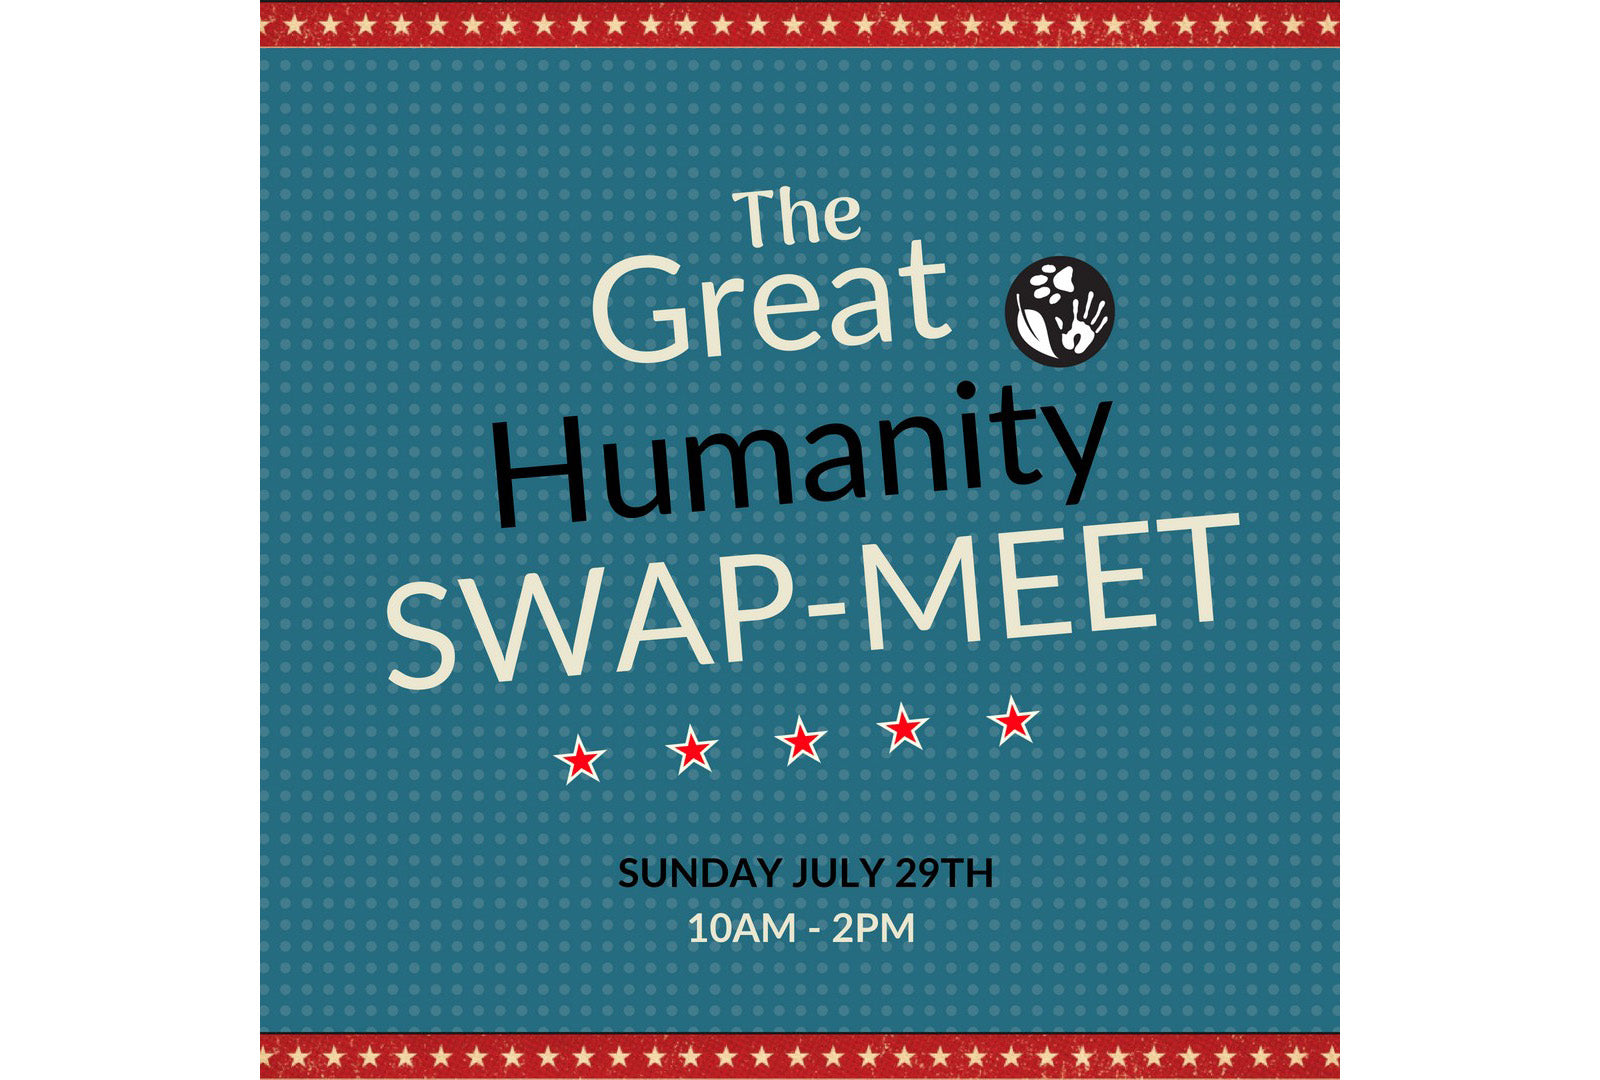 The Great Humanity Swap Meet